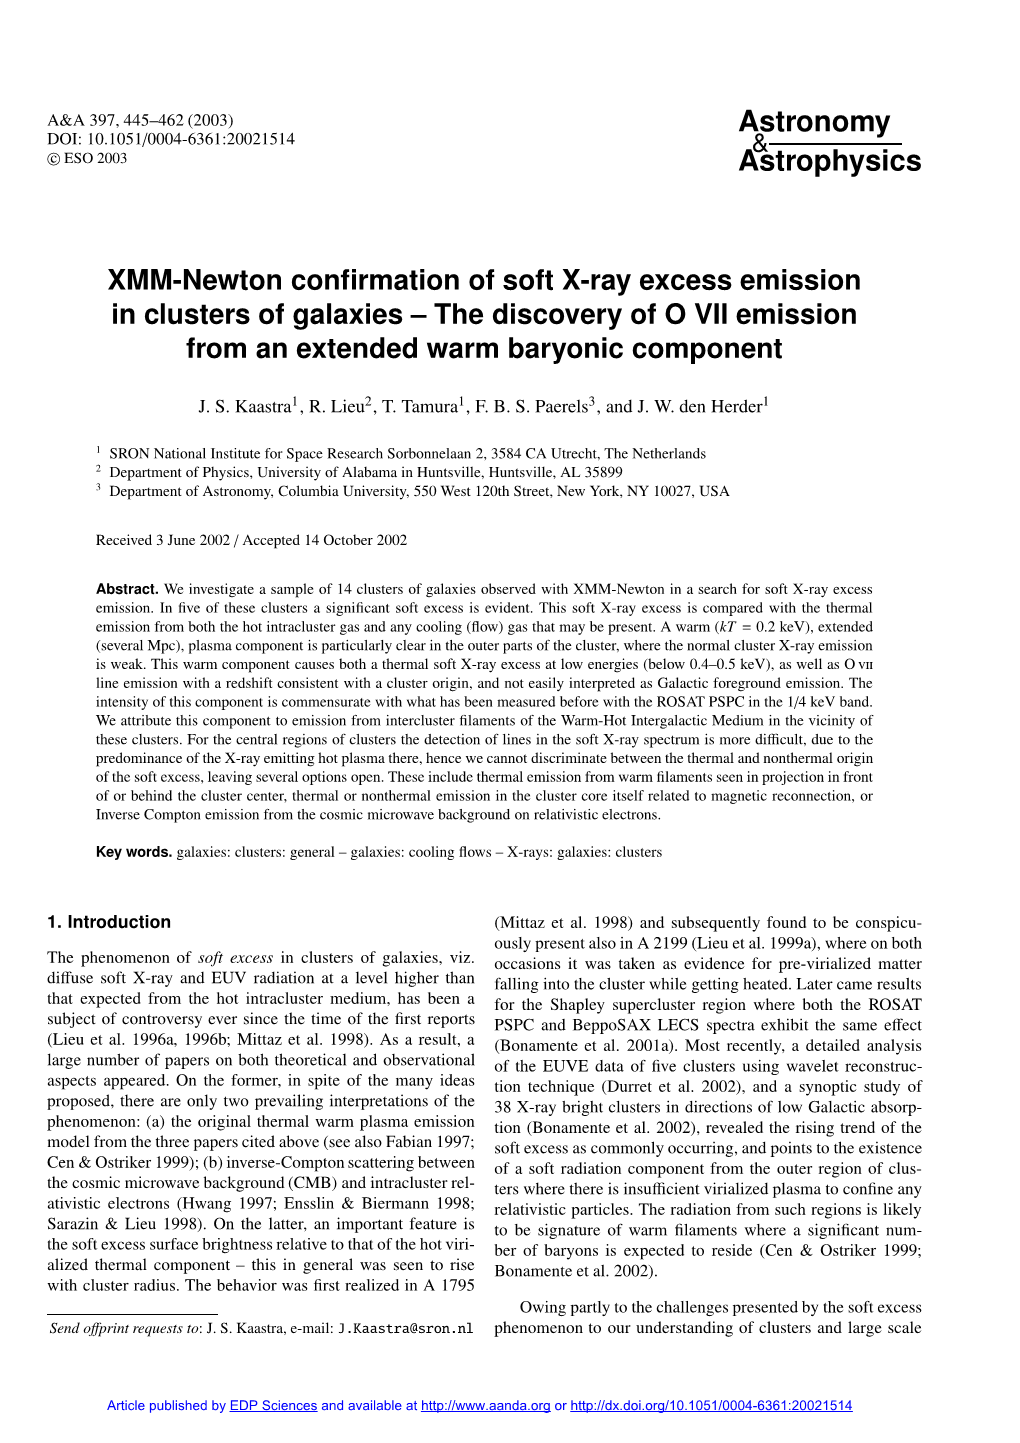 XMM-Newton Confirmation of Soft X-Ray